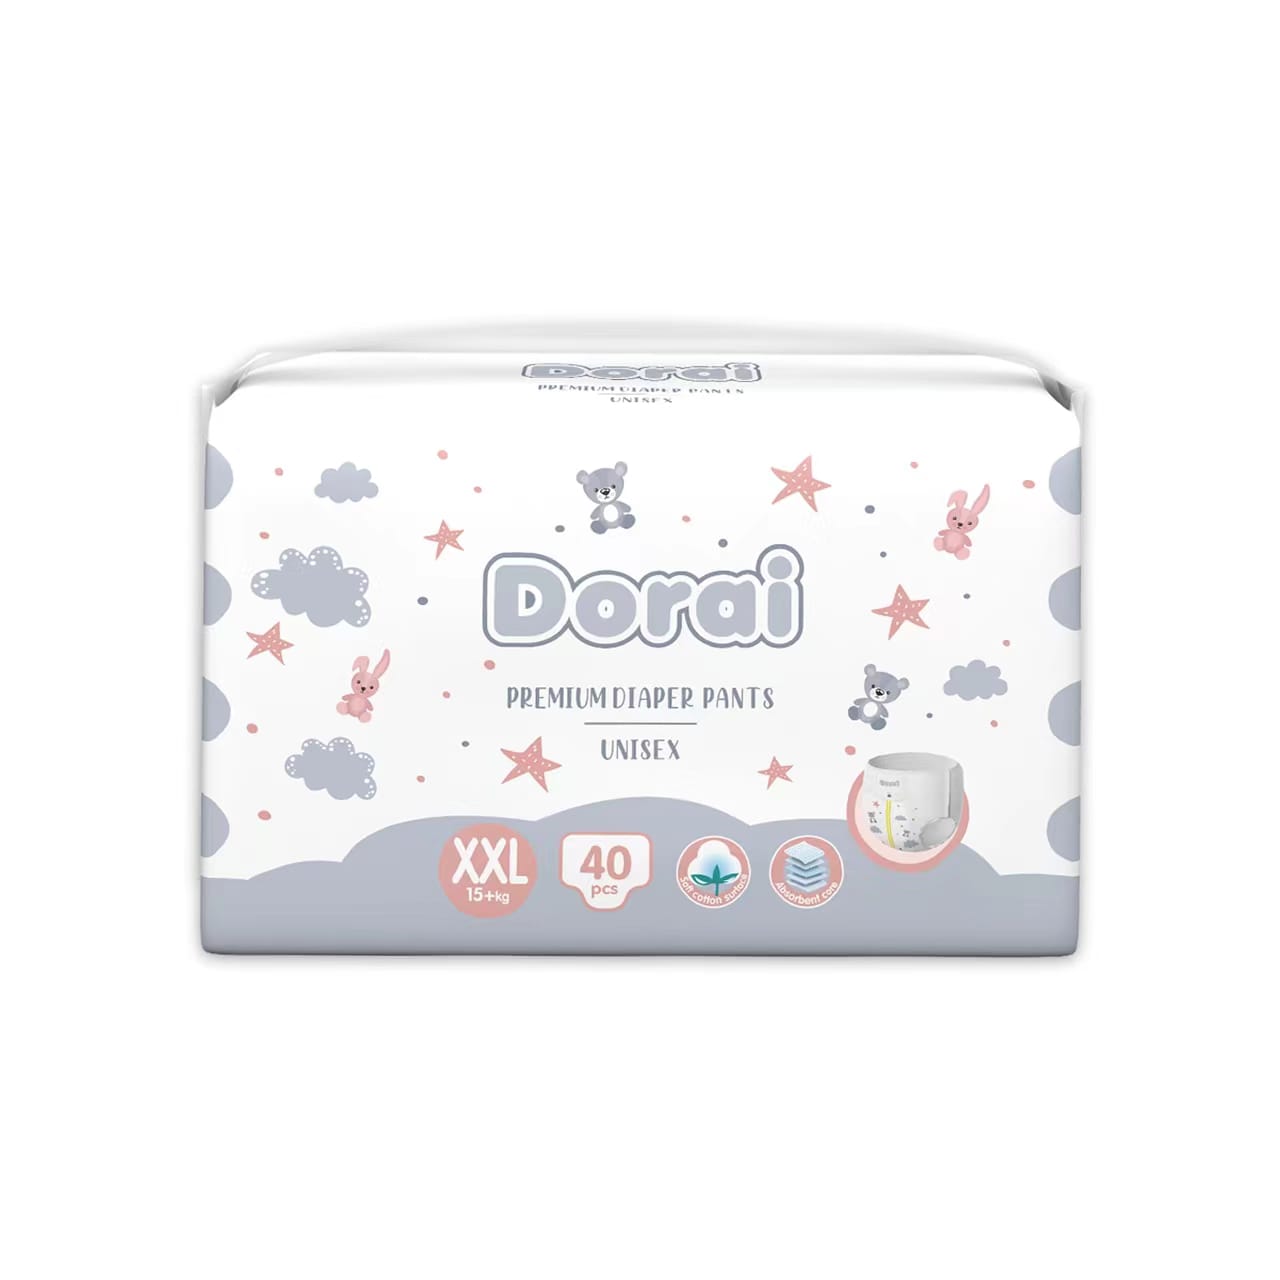 Dorai Baby Premium Diaper Pants Carton